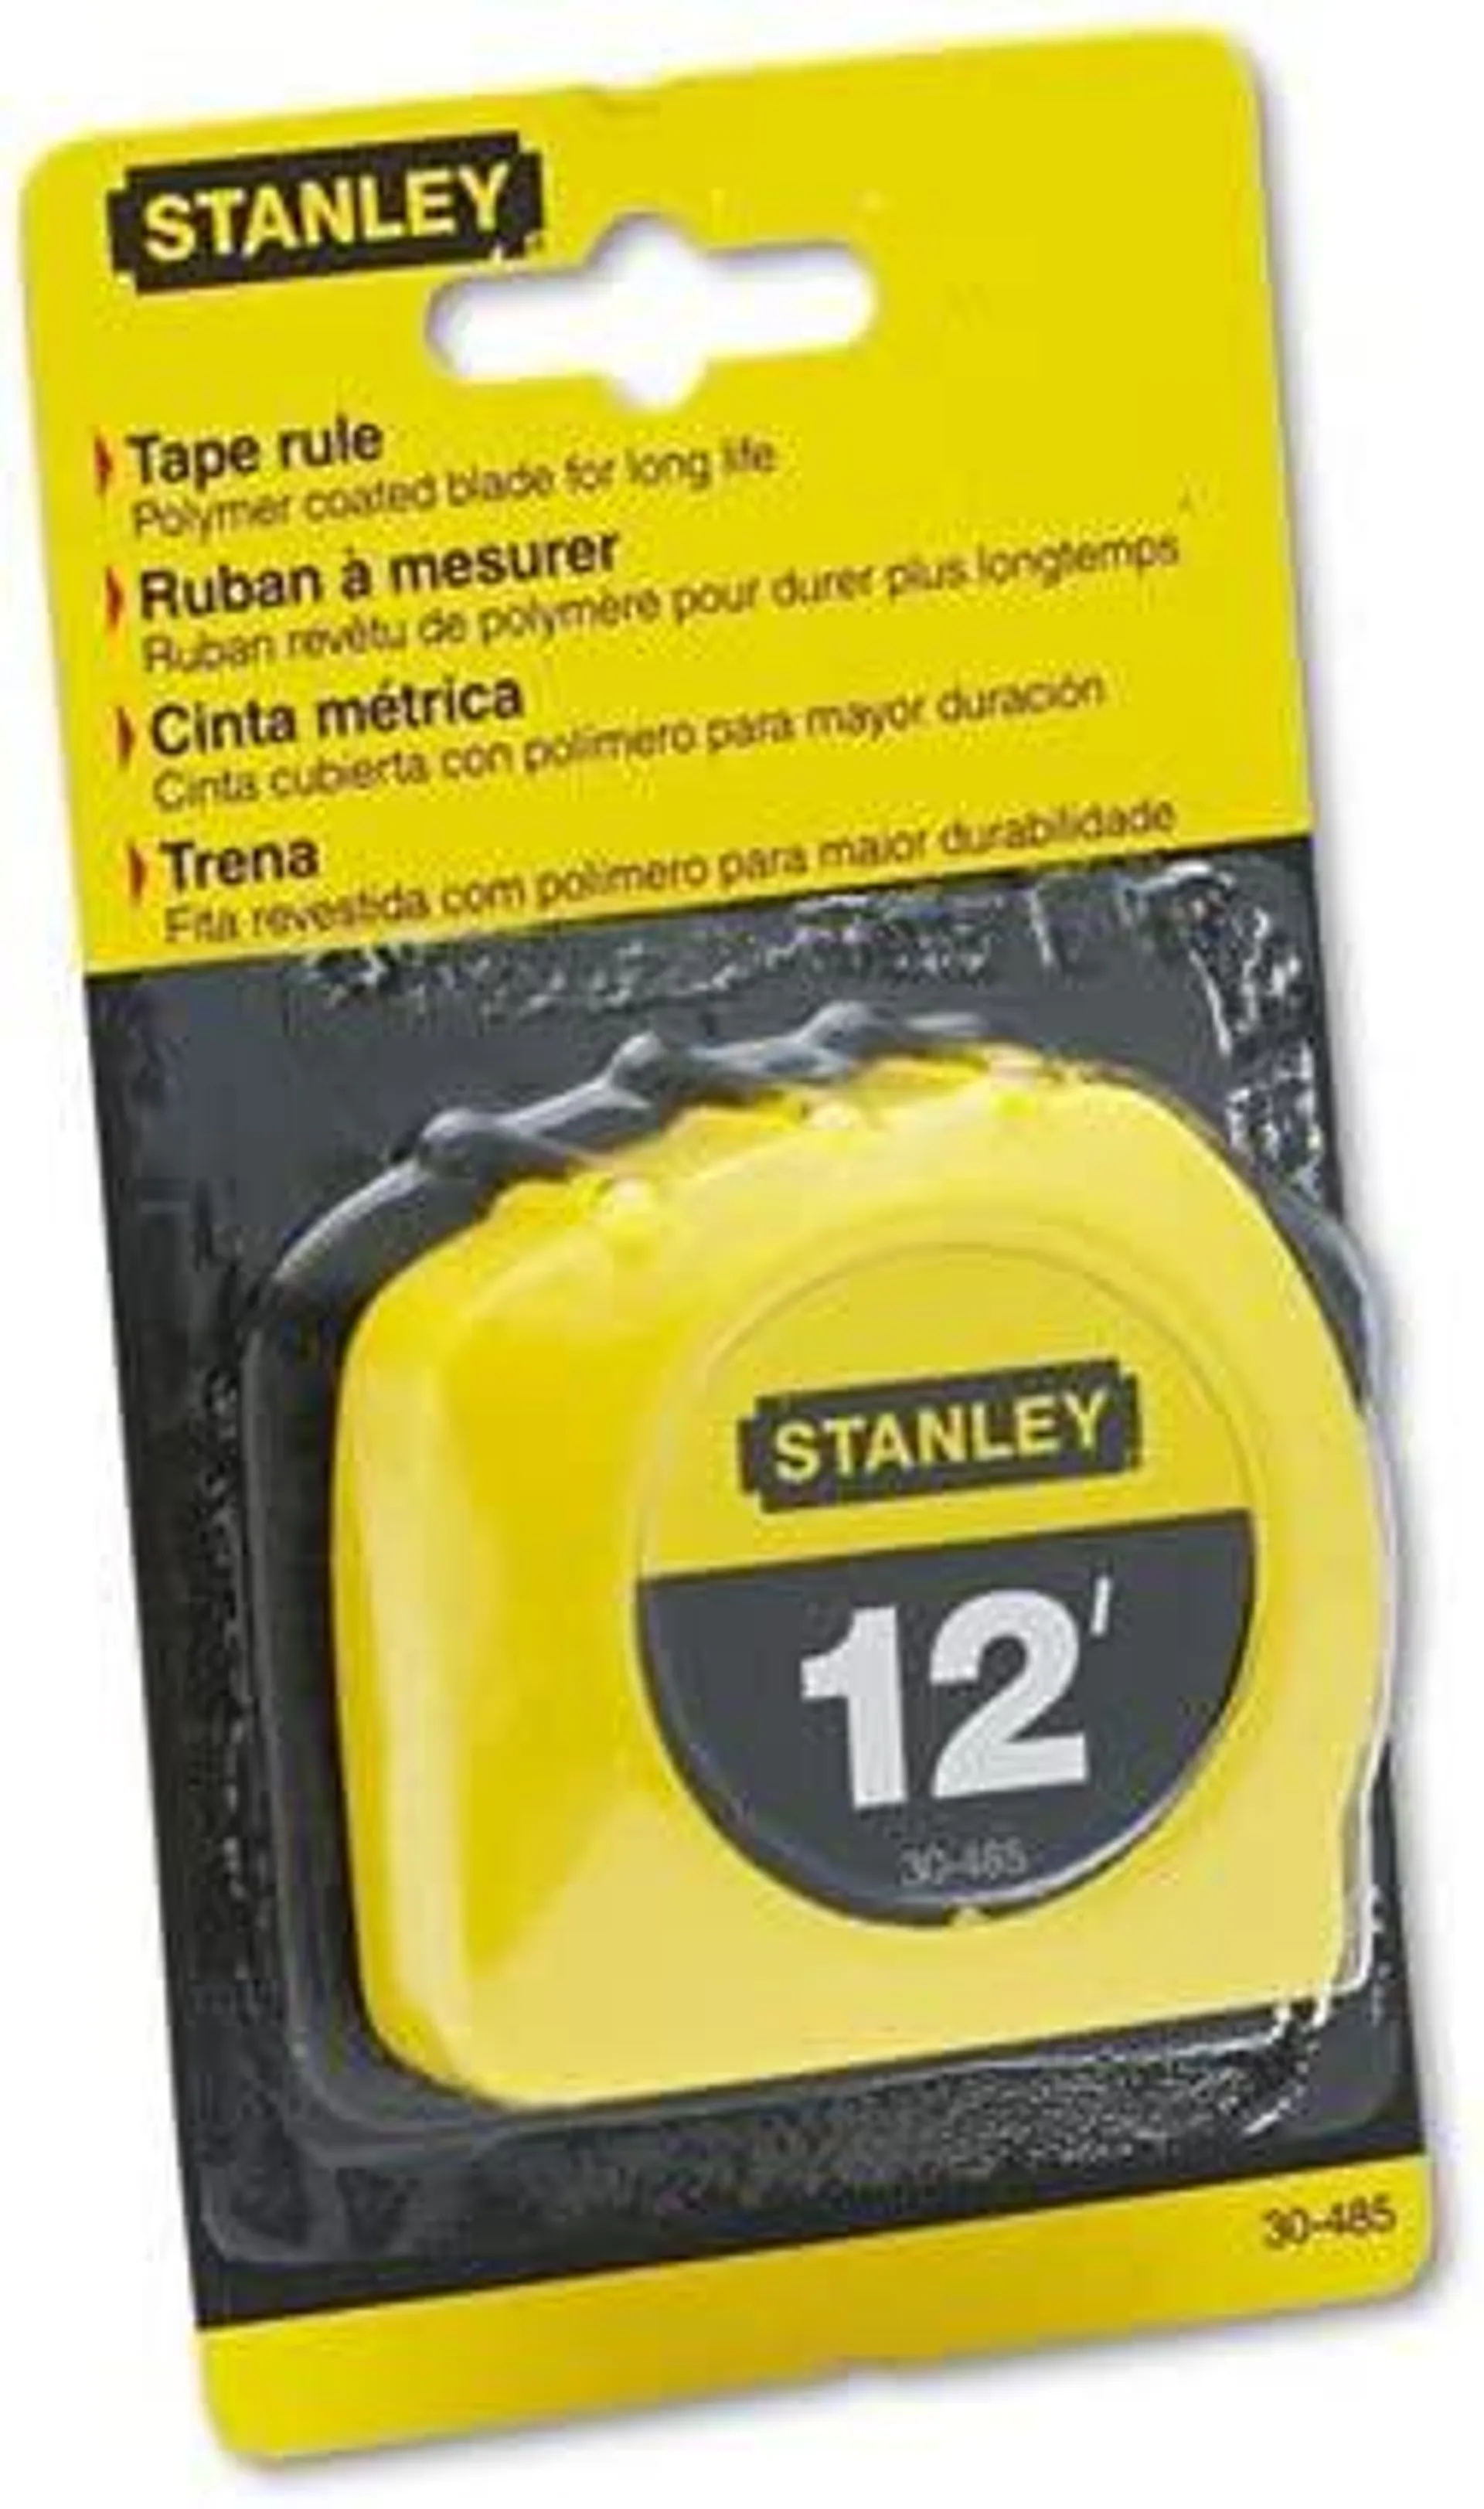 STANLEY BOSTITCH / BOS30485 / Power Return Tape Measure w/Belt Clip, 1/2"w x12 ft., Yellow / Sold as 1 EA